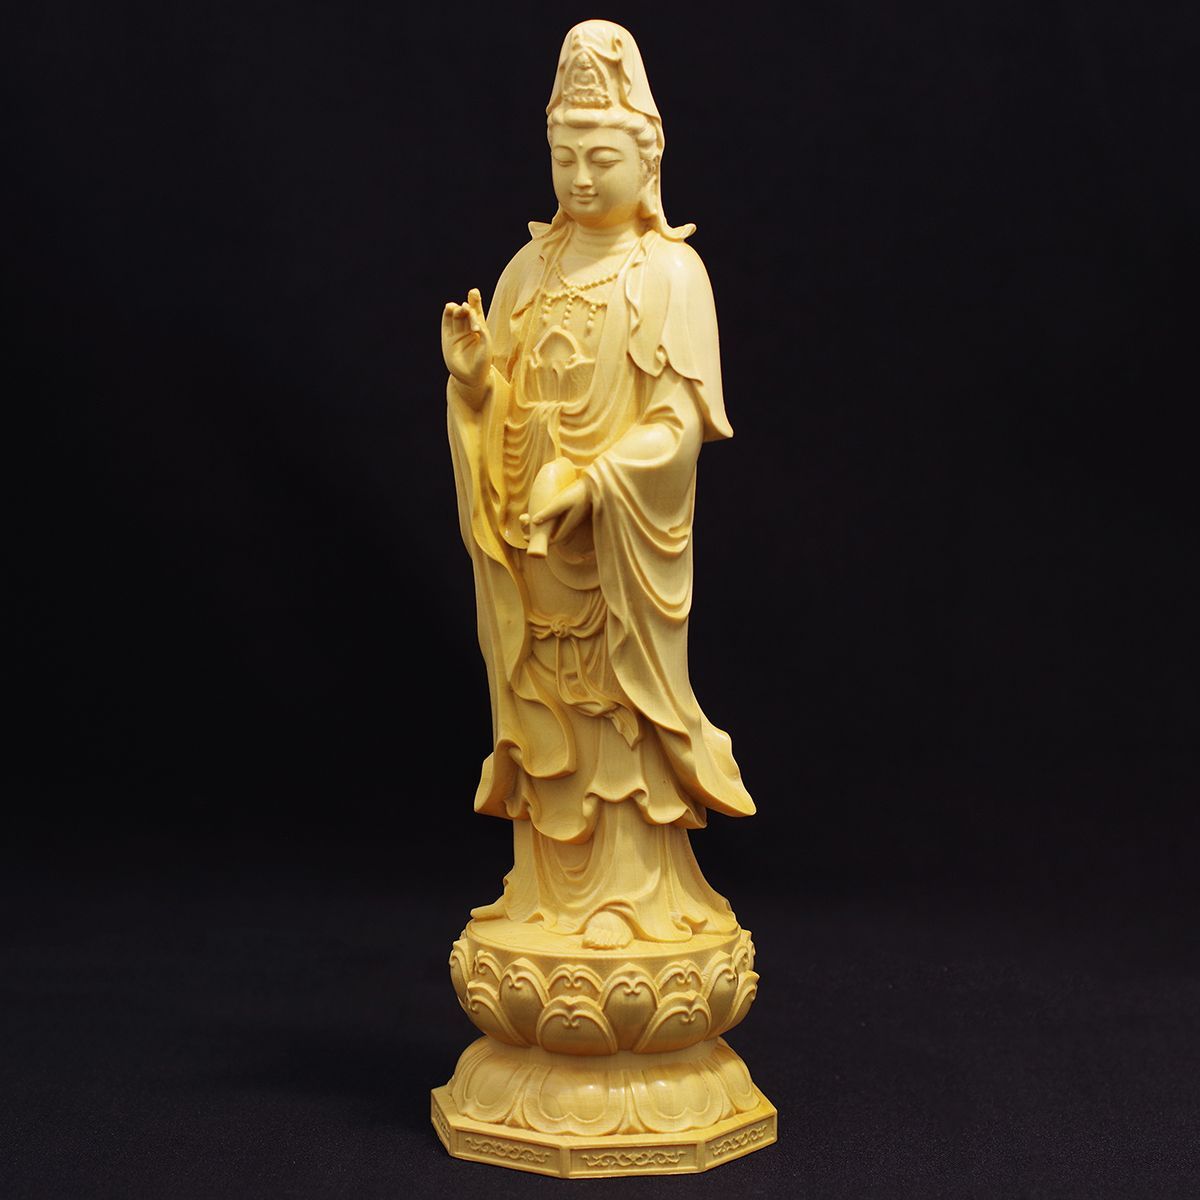 【HAMMARS】 観音菩薩立像 20cm 天然木製 (柘植ツゲ) 観音像 木彫仏像